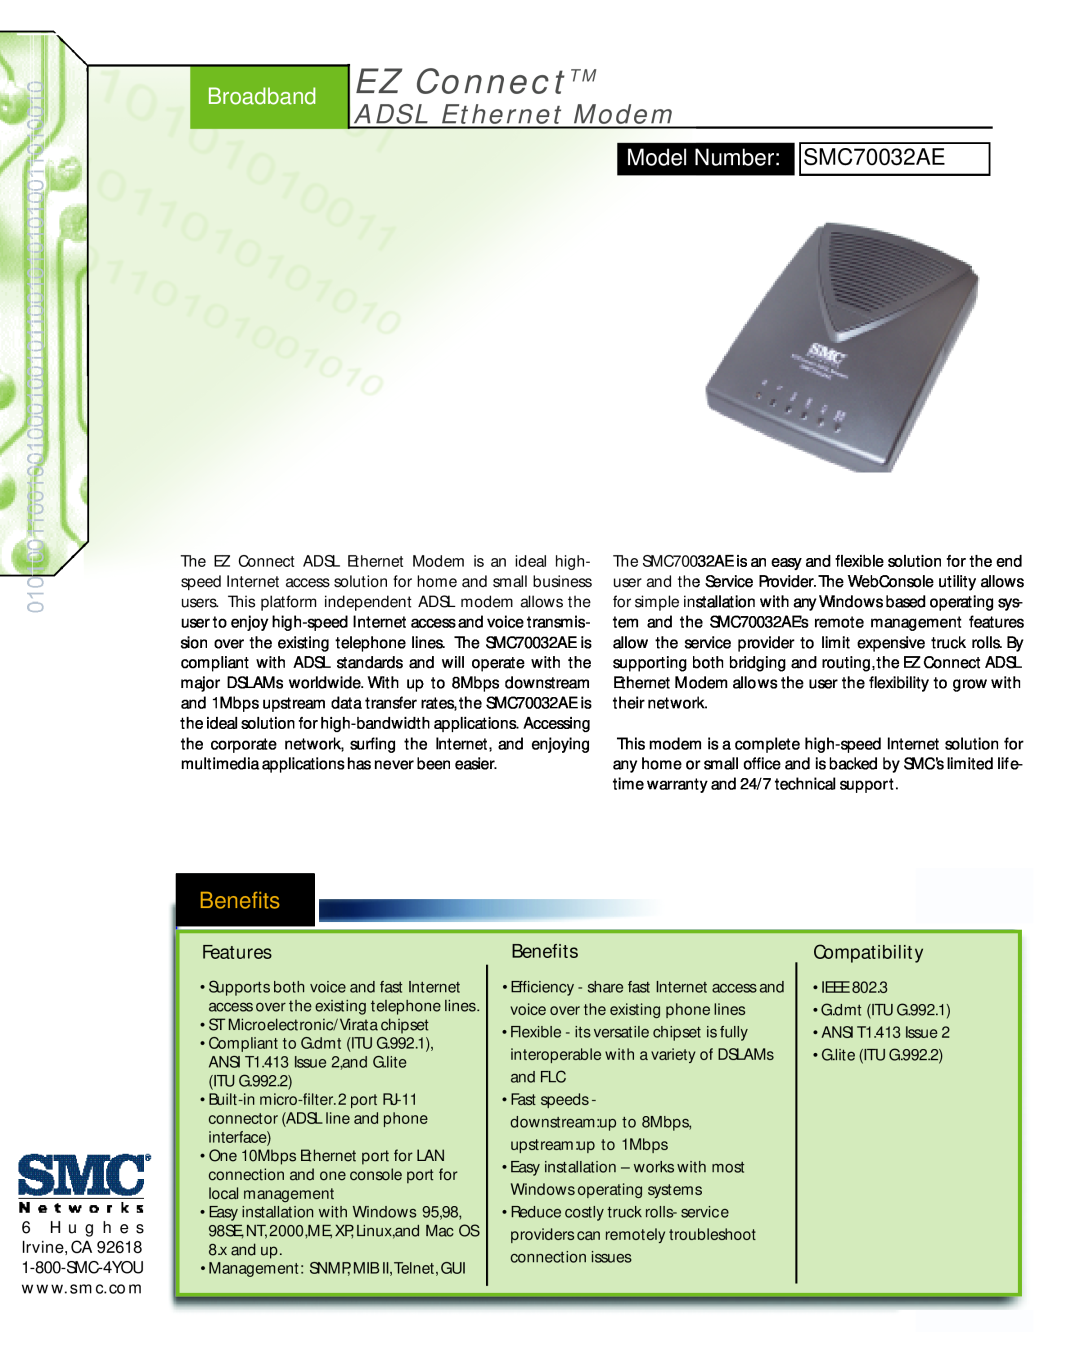 SMC Networks warranty EZ ConnectTM, ADSL Ethernet Modem, Broadband, Model Number SMC70032AE, Features, Benefits 